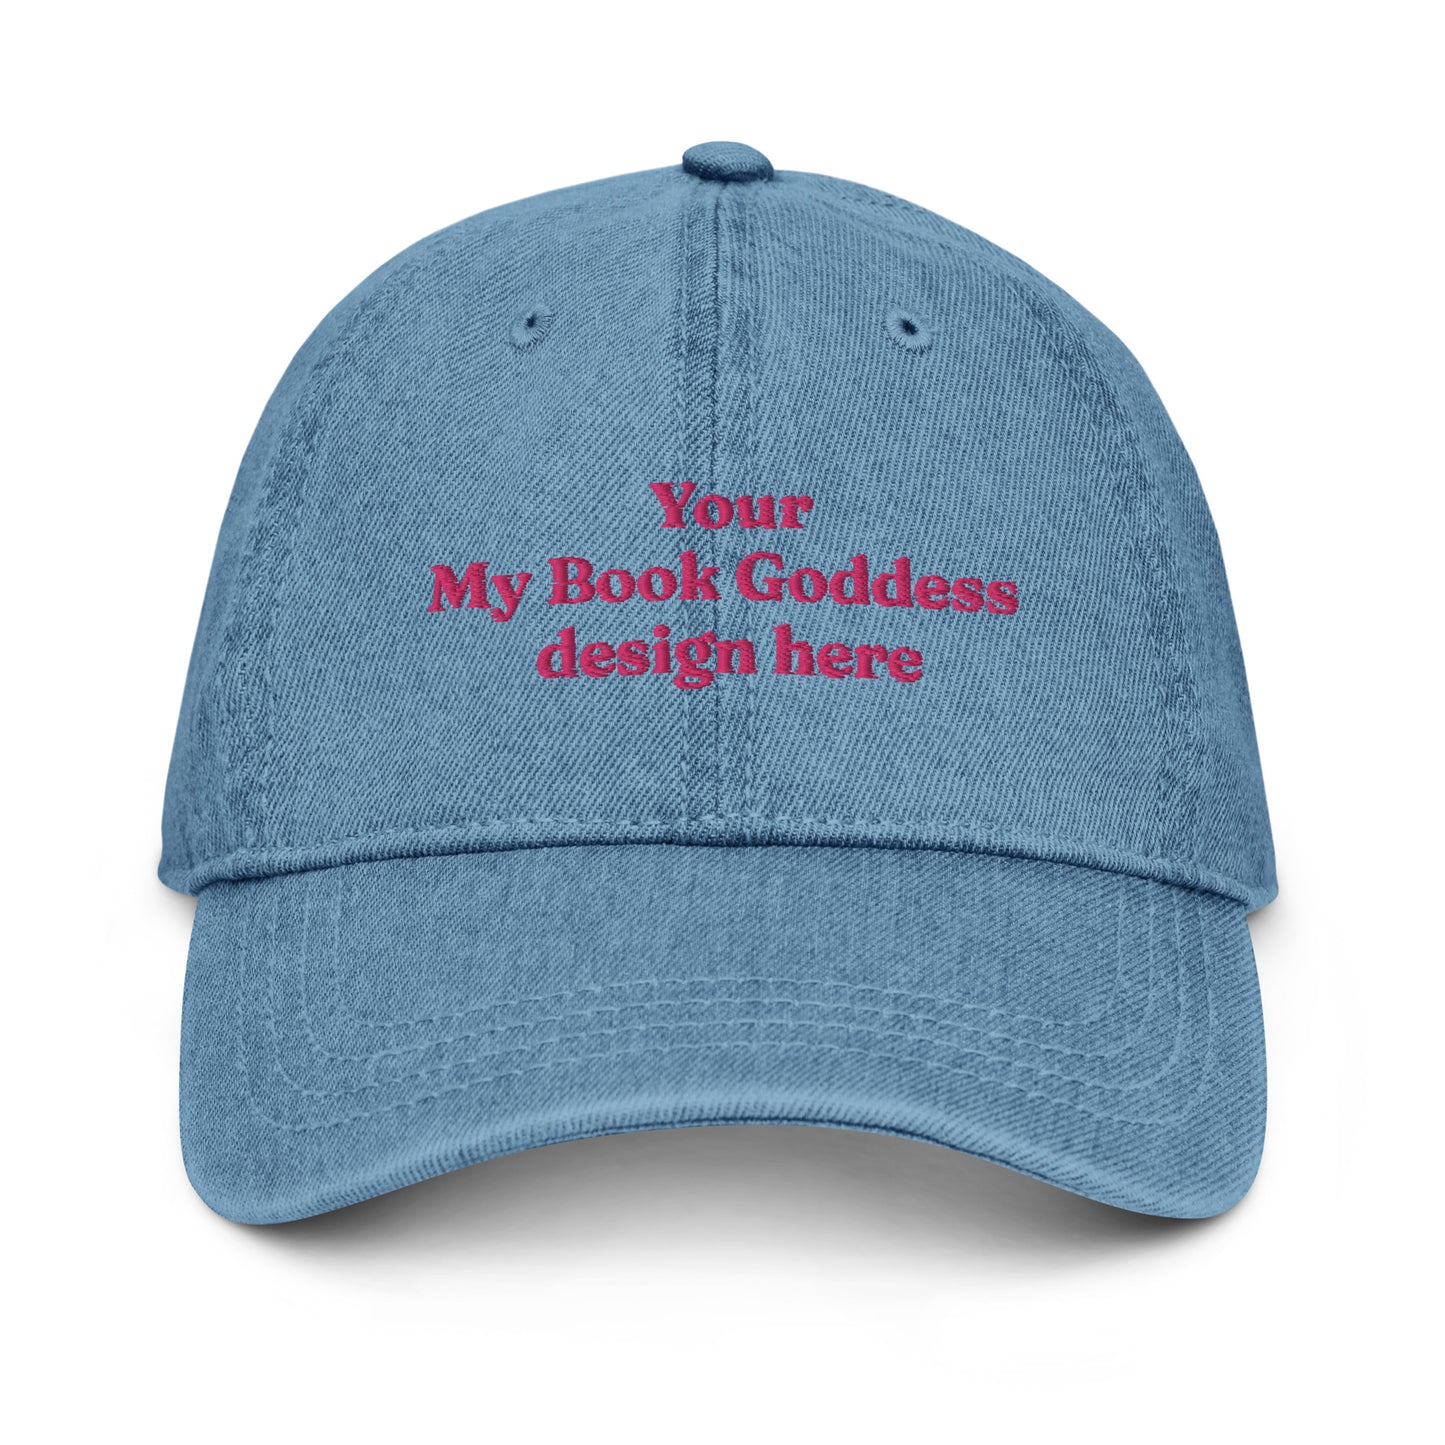 Choose Your Design- Bookish Denim Baseball Hat